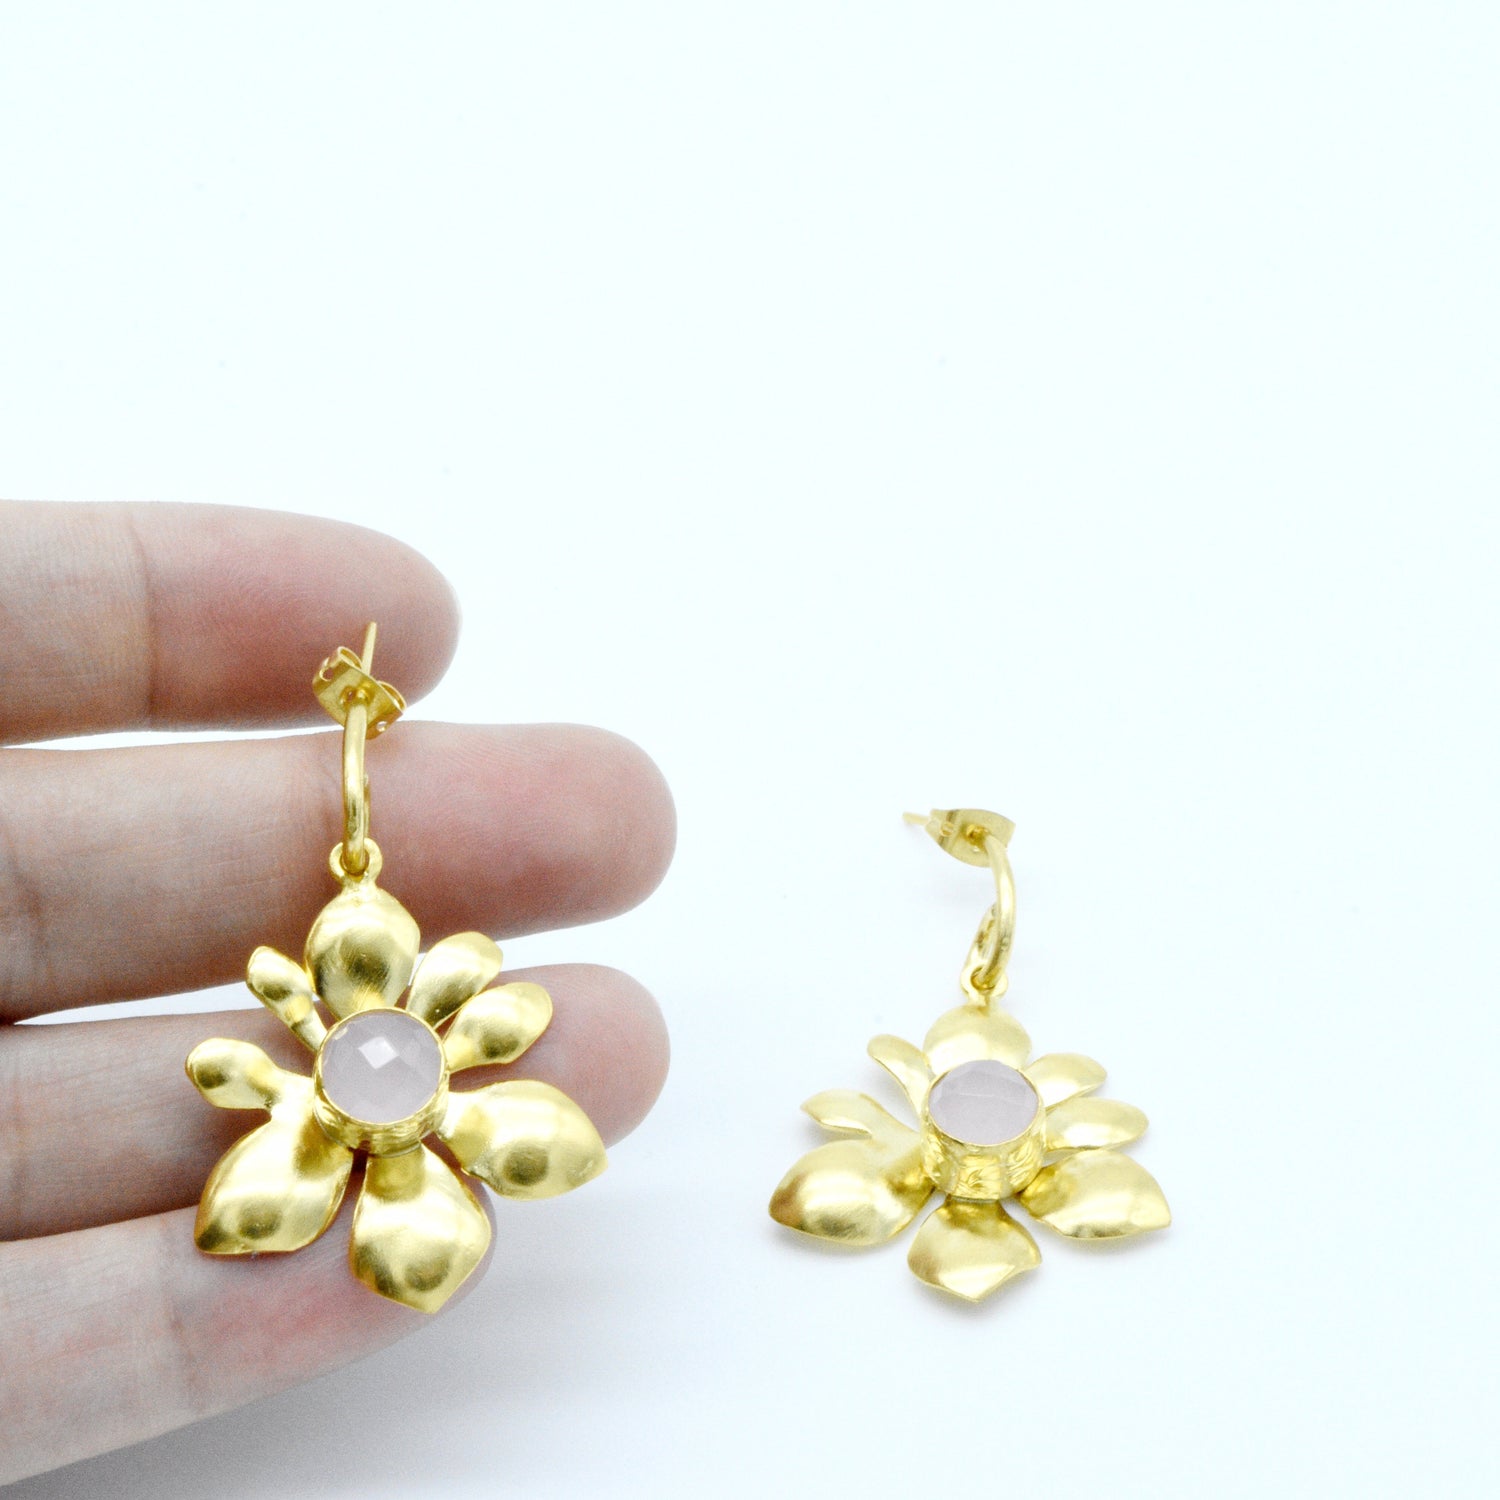 Aylas Ottoman Gold plated Rose quartz semi precious gem stone earrings. - Ottoman Handmade Jewellery Hand Made Gold Plated